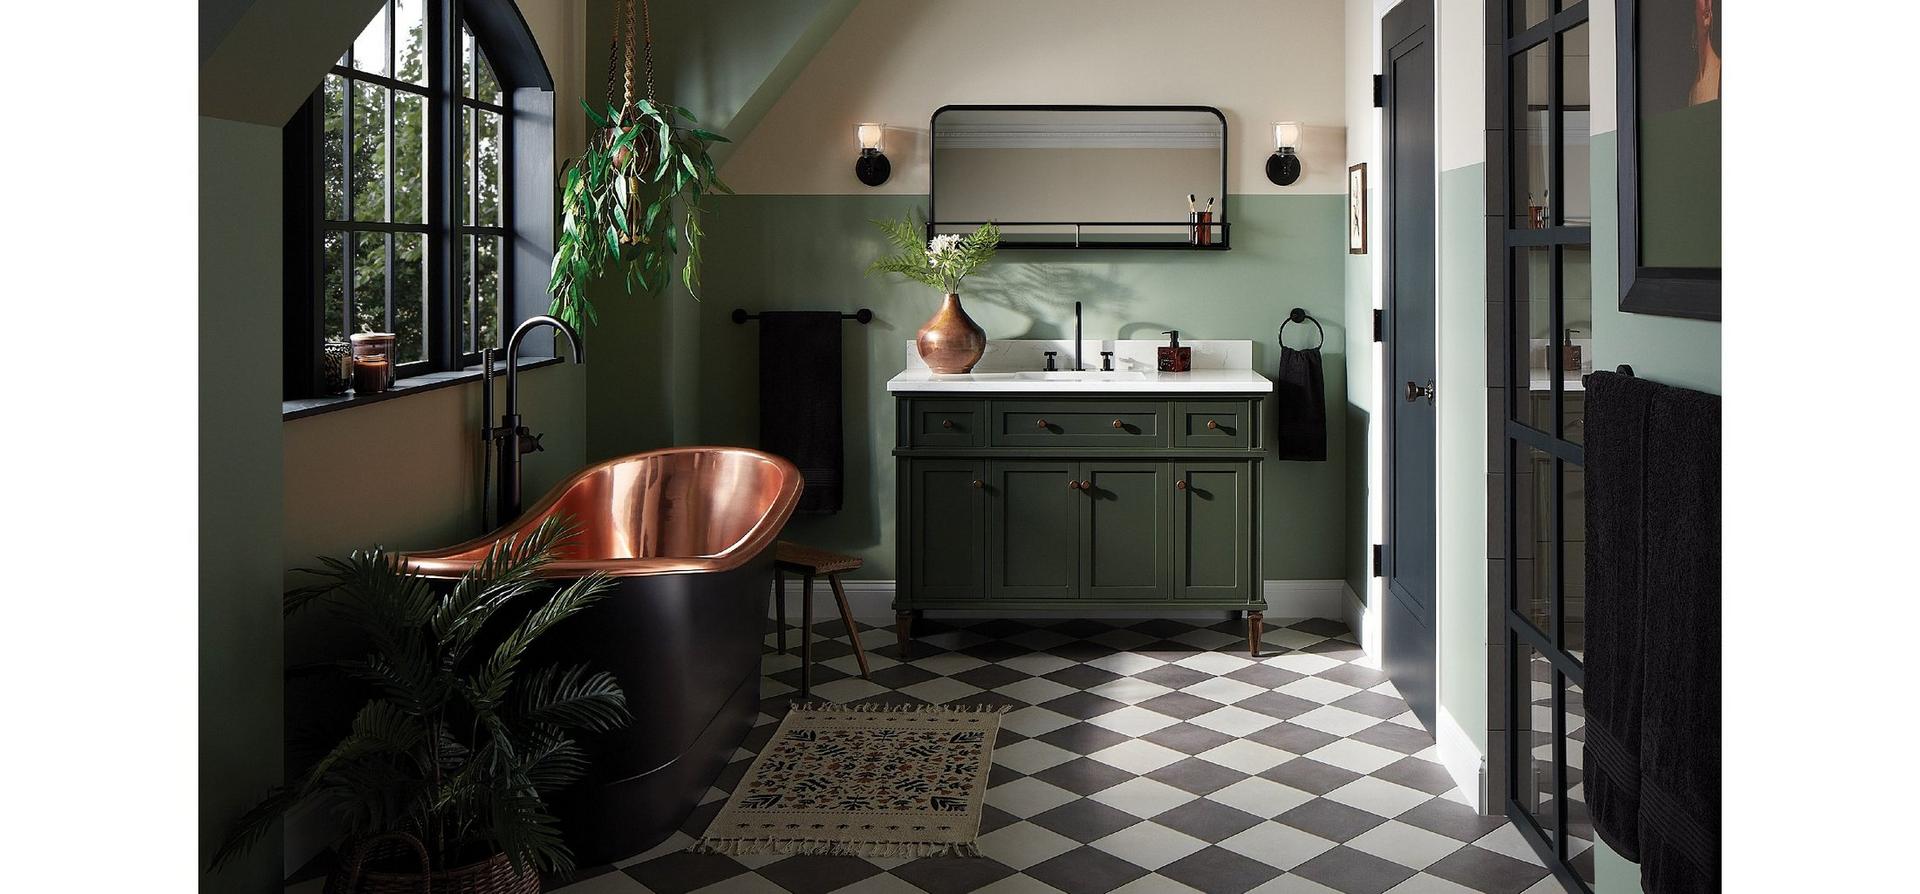 Statement bathroom with 48" Elmdale Vanity in Dark Olive Green, Vassor Faucet, Towel Ring, Tub Faucet in Matte Black, Thaine Tub